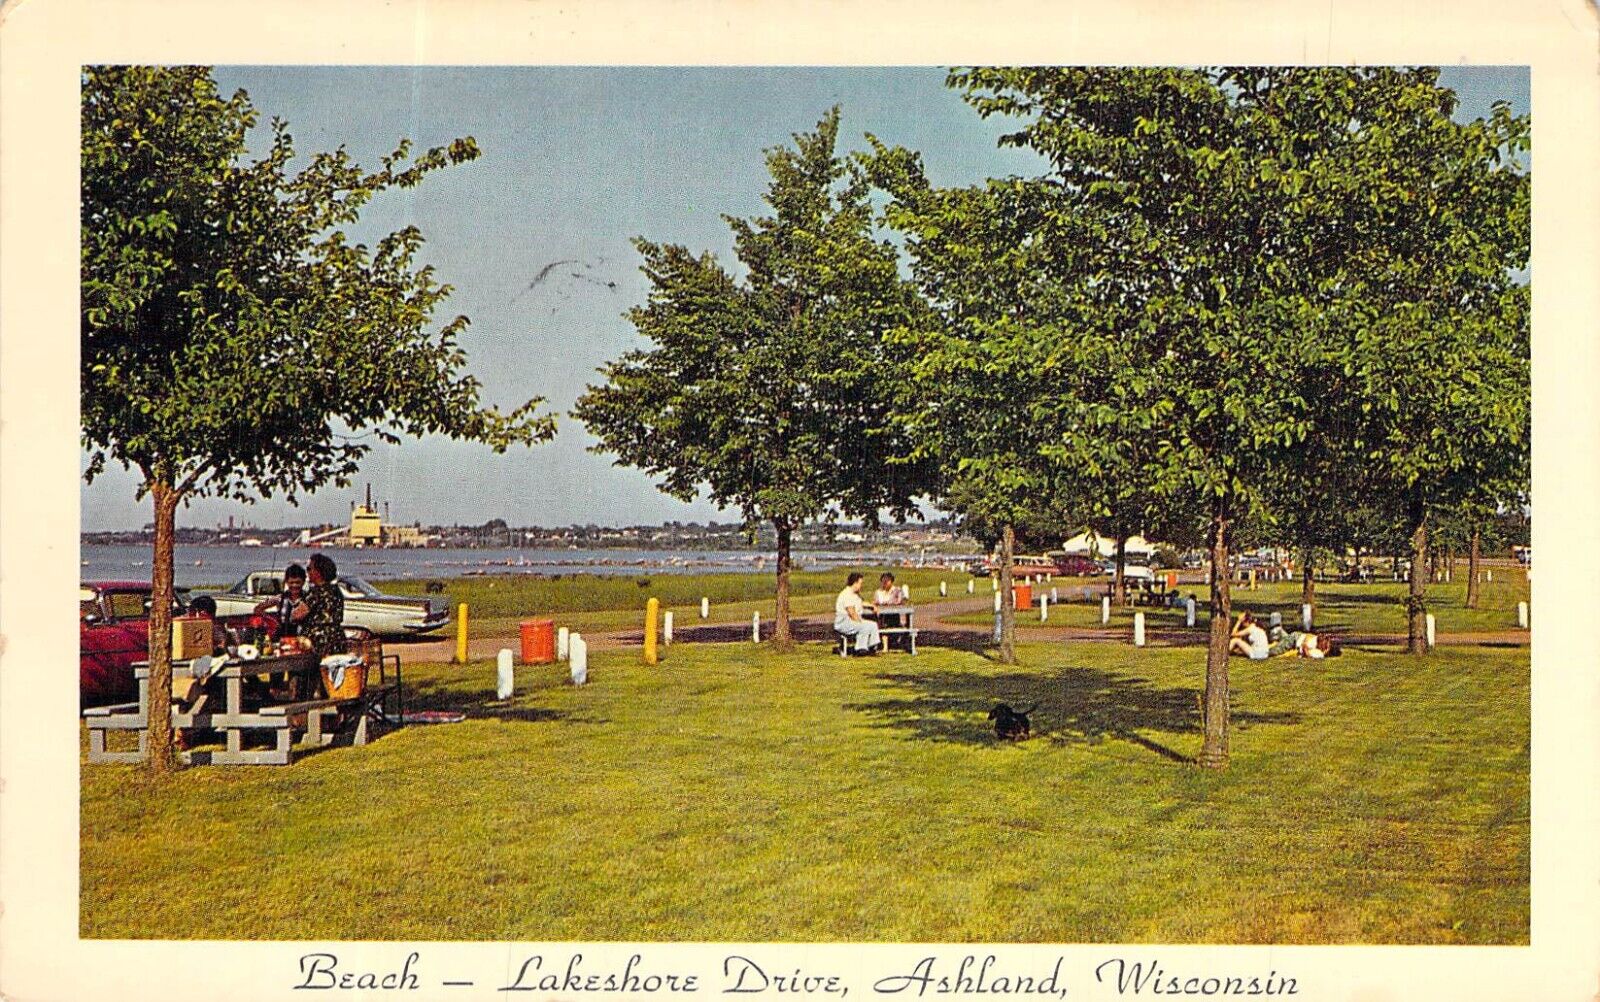 Beach - Lakeshore Drive, Ashland, Wisconsin